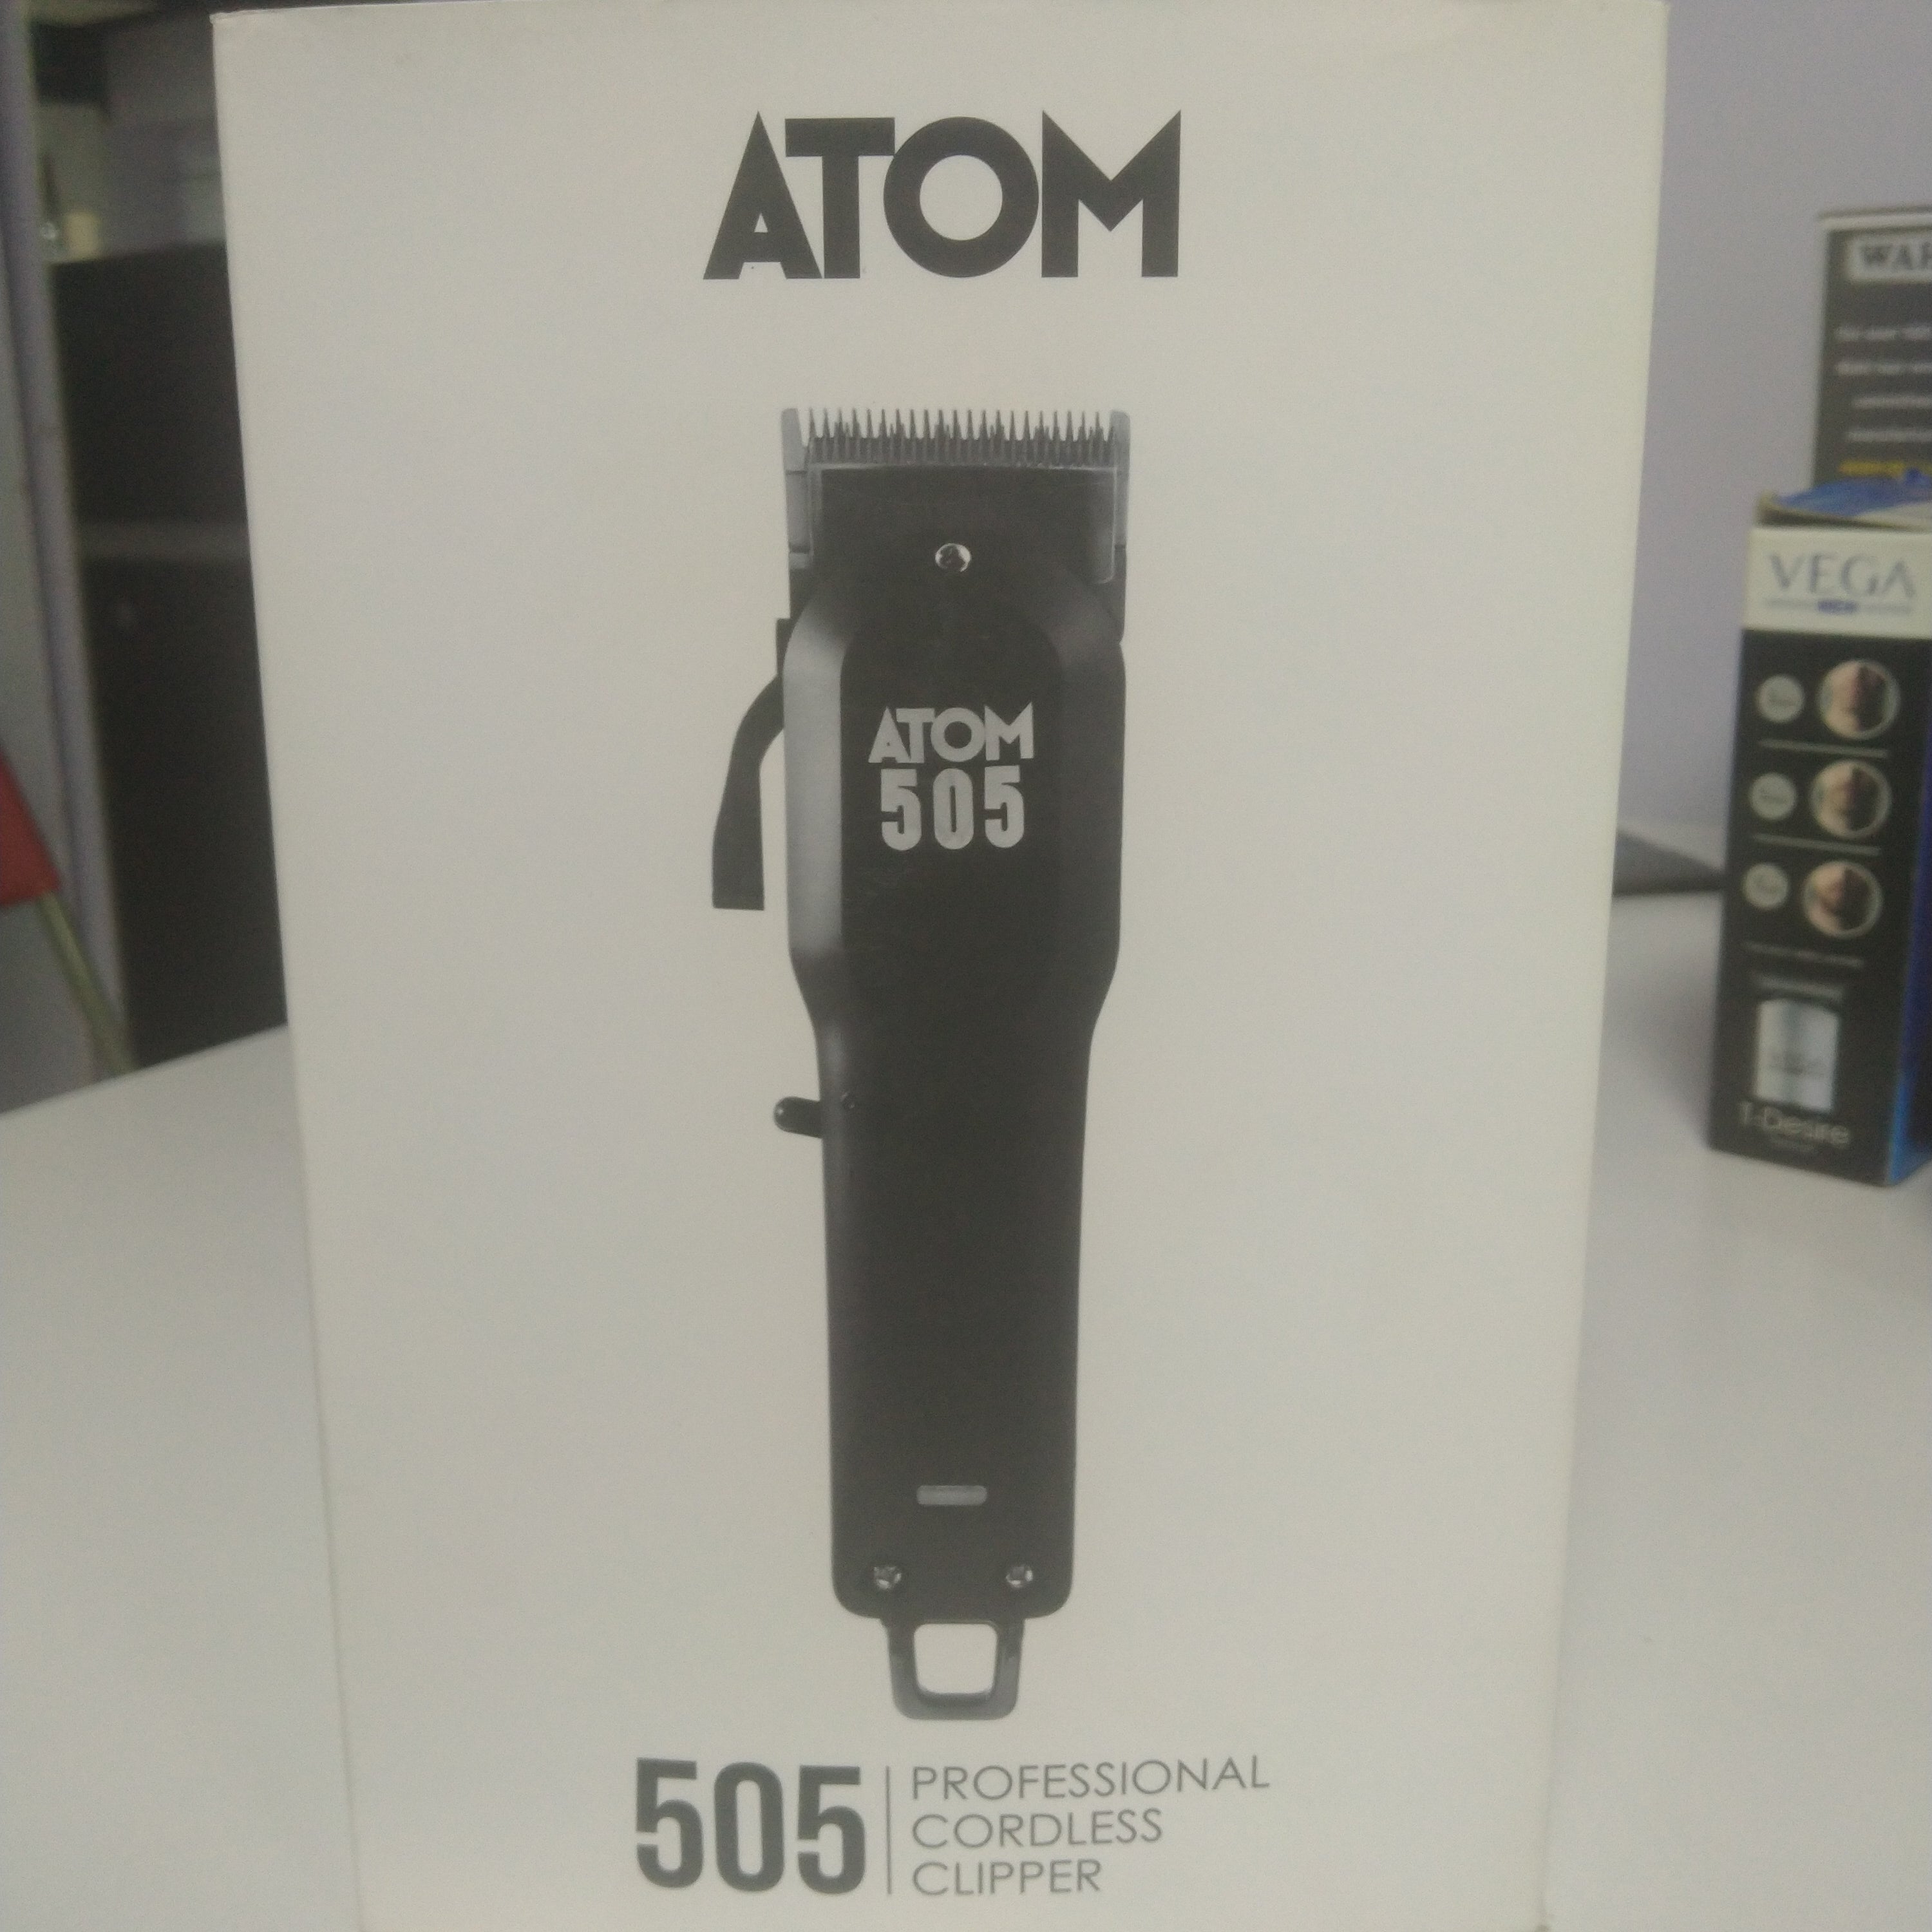 Atom 505 professional cordless clipper